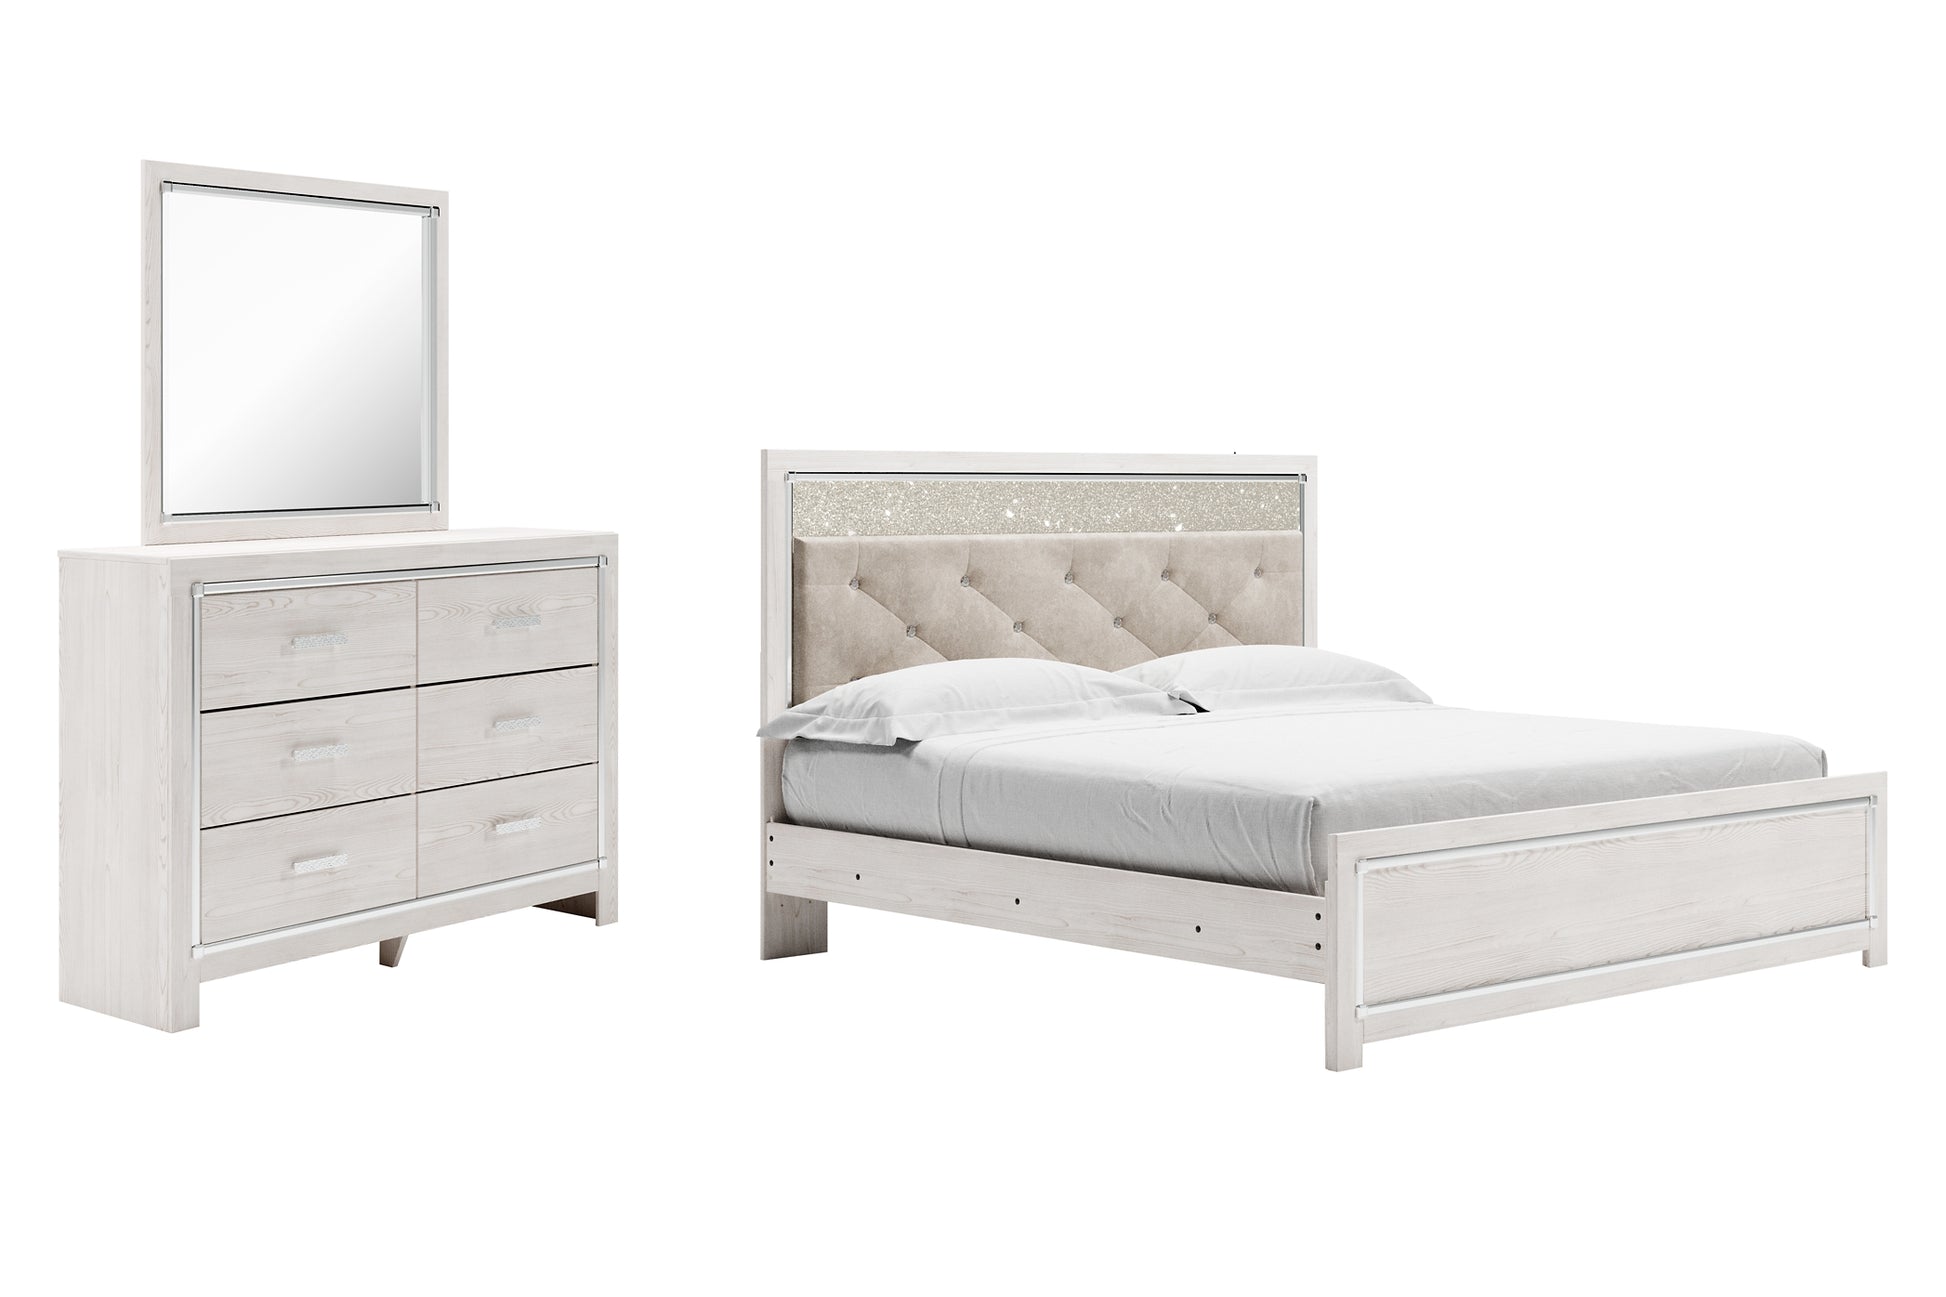 Altyra King Panel Bed with Mirrored Dresser Wilson Furniture (OH)  in Bridgeport, Ohio. Serving Bridgeport, Yorkville, Bellaire, & Avondale